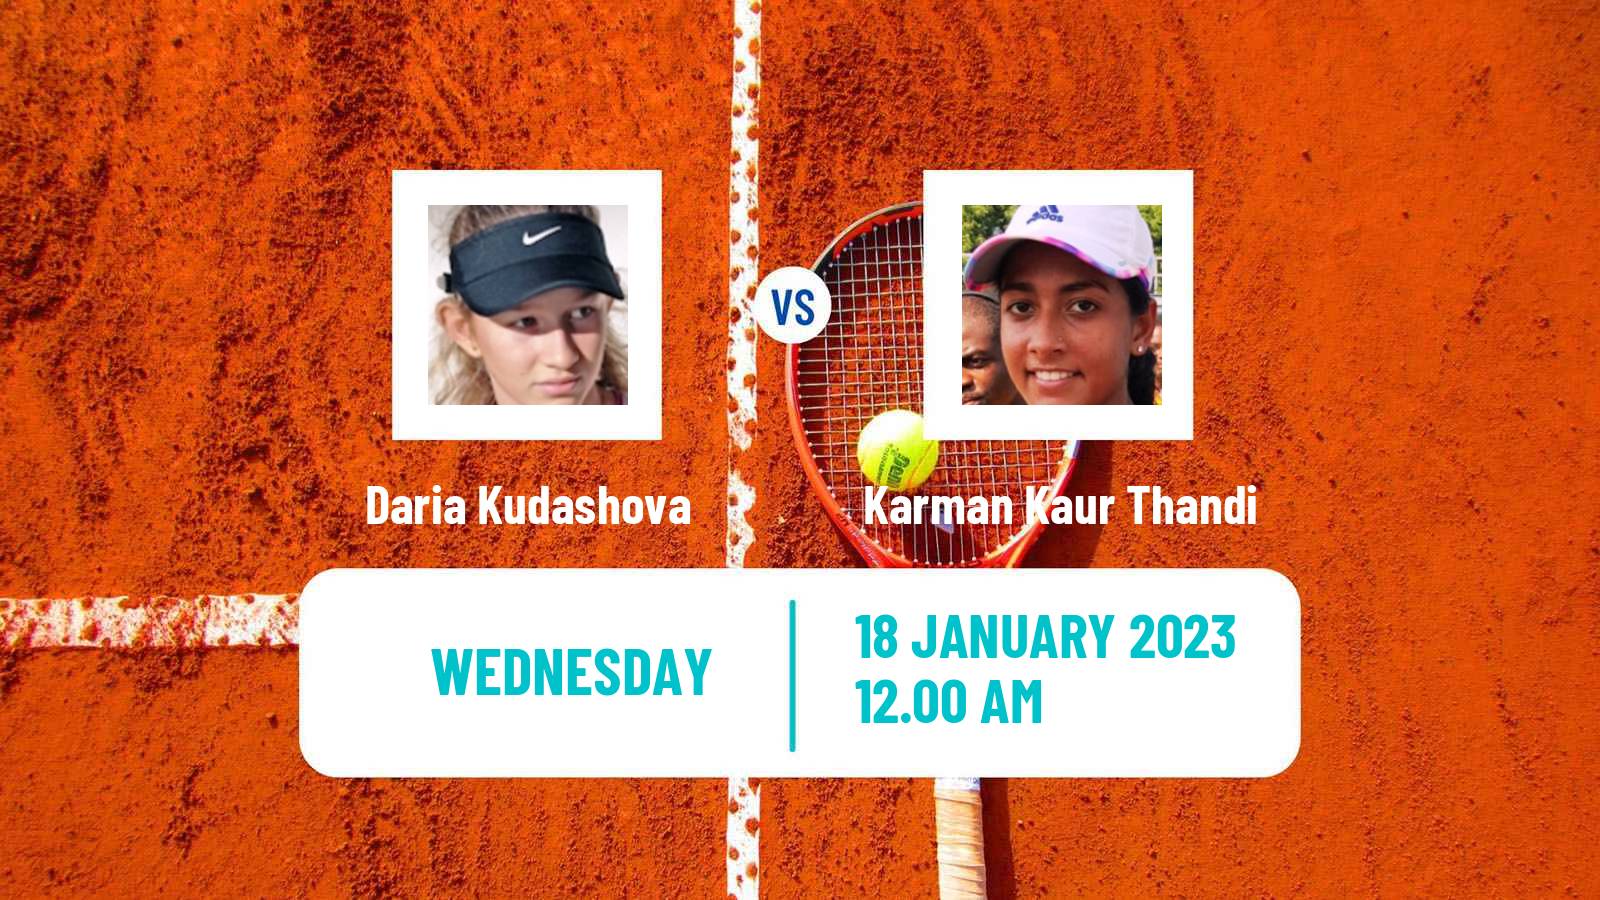 Tennis ITF Tournaments Daria Kudashova - Karman Kaur Thandi